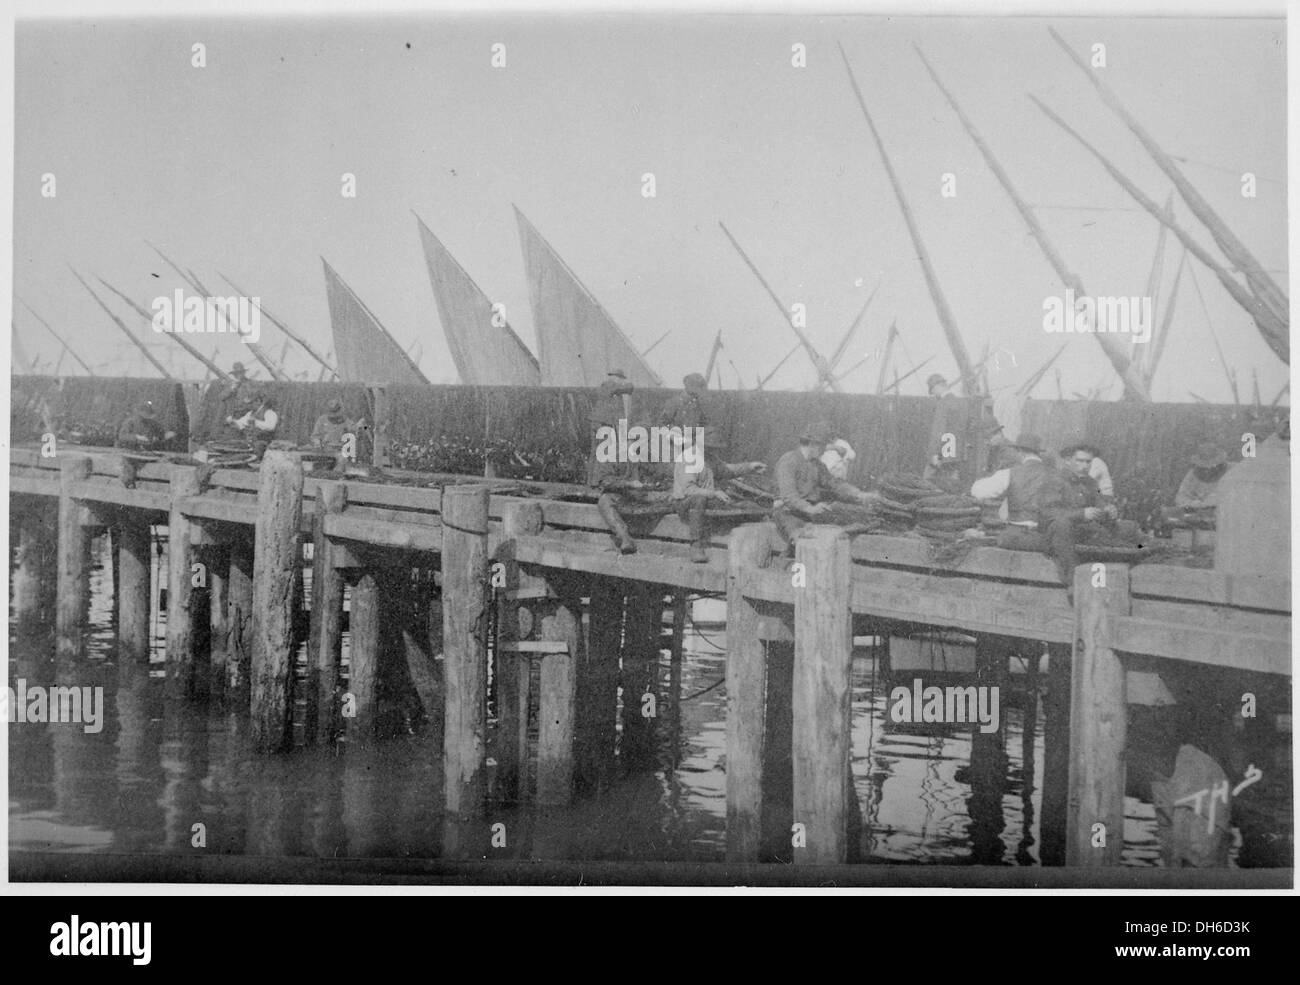 Photograph of Italian Fishermen Mending Nets on a Wharf in San Francisco, California Harbor, ca. 1891 - ca. 1891 513108 Stock Photo